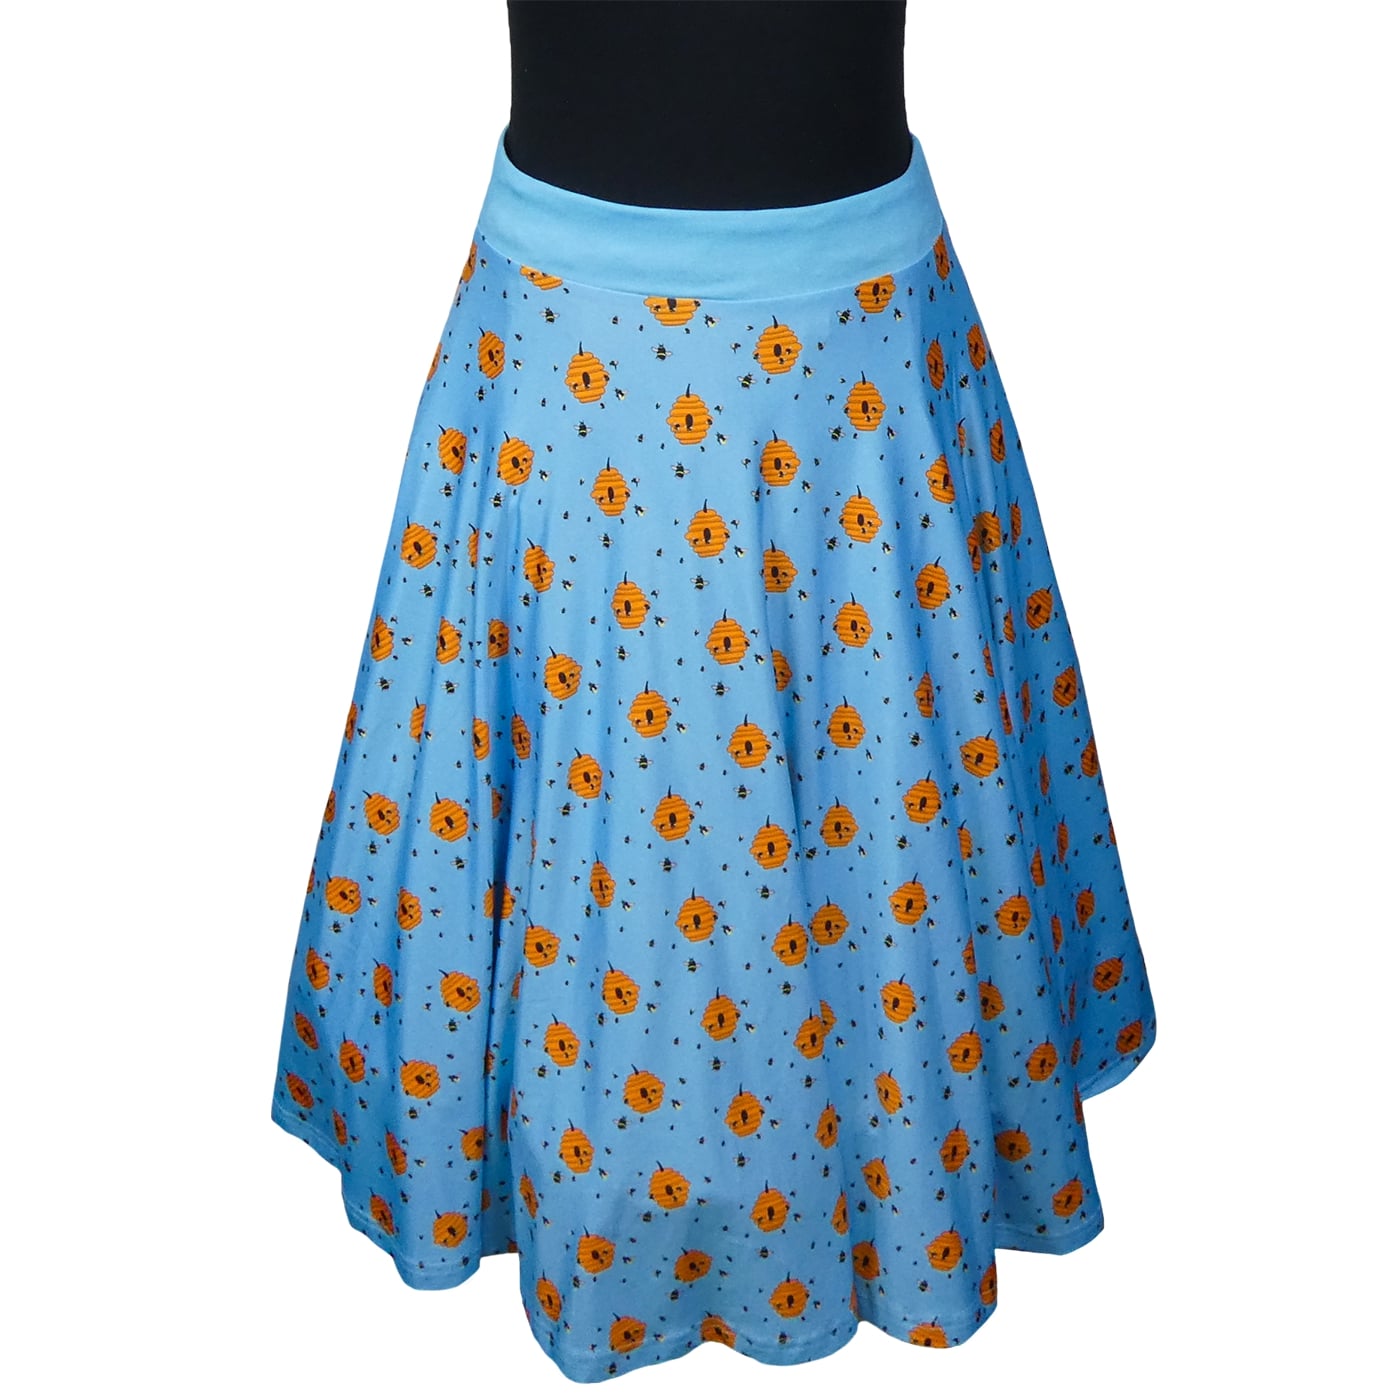 Hive Swishy Skirt by RainbowsAndFairies.com.au (Bees - Beehive - Animal Print - Queen Bee - Circle Skirt With Pockets - Mod Retro - Rockabilly) - SKU: CL_SWISH_BHIVE_ORG - Pic-01